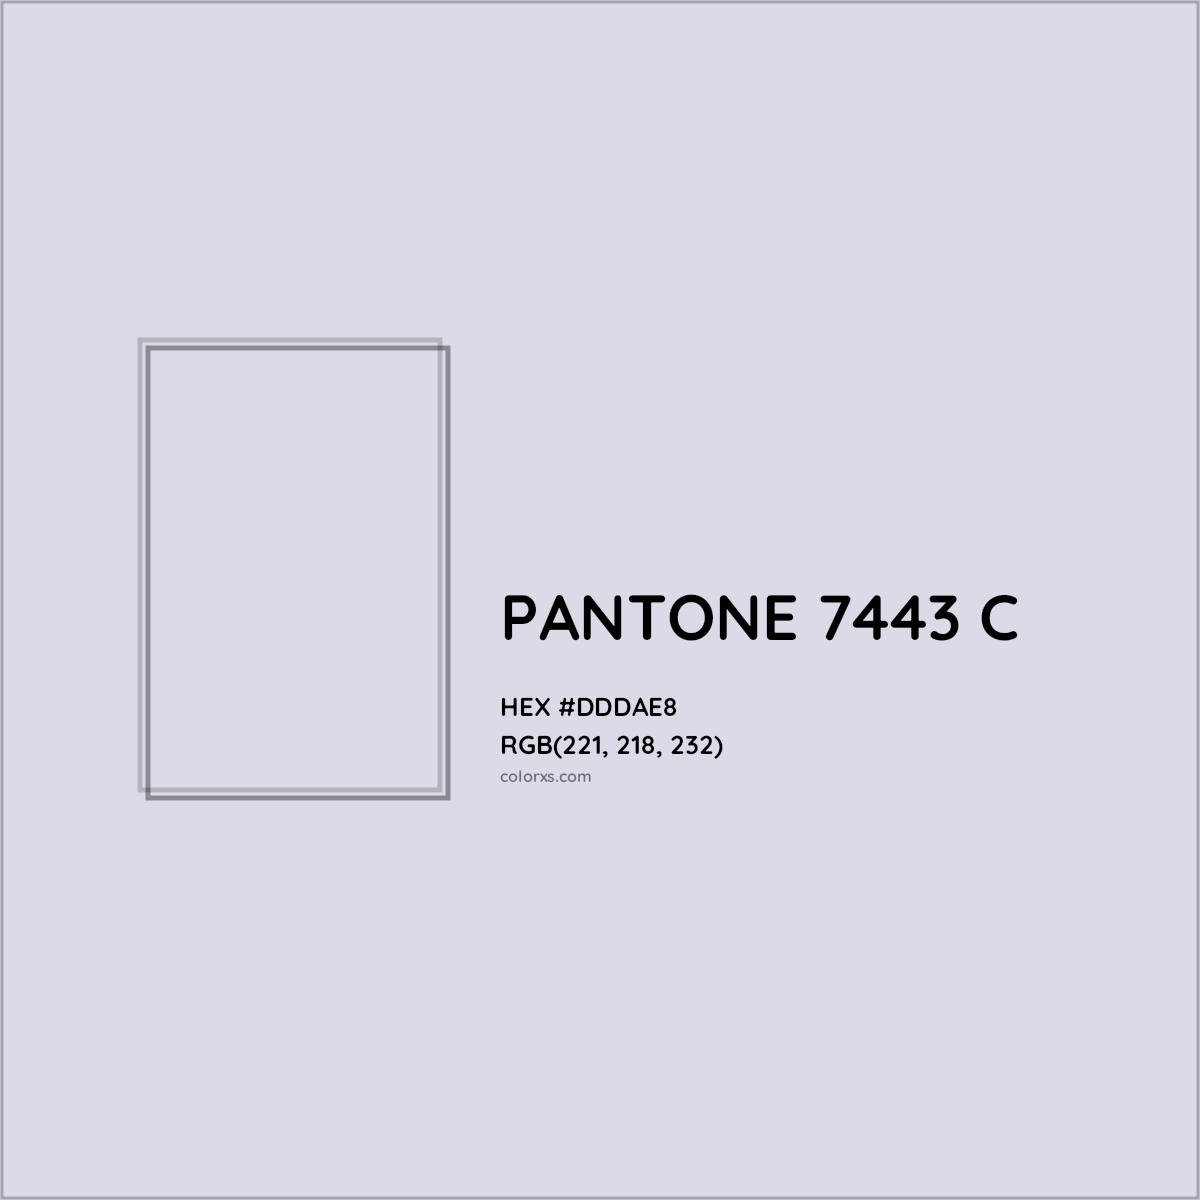 HEX #DDDAE8 PANTONE 7443 C CMS Pantone PMS - Color Code